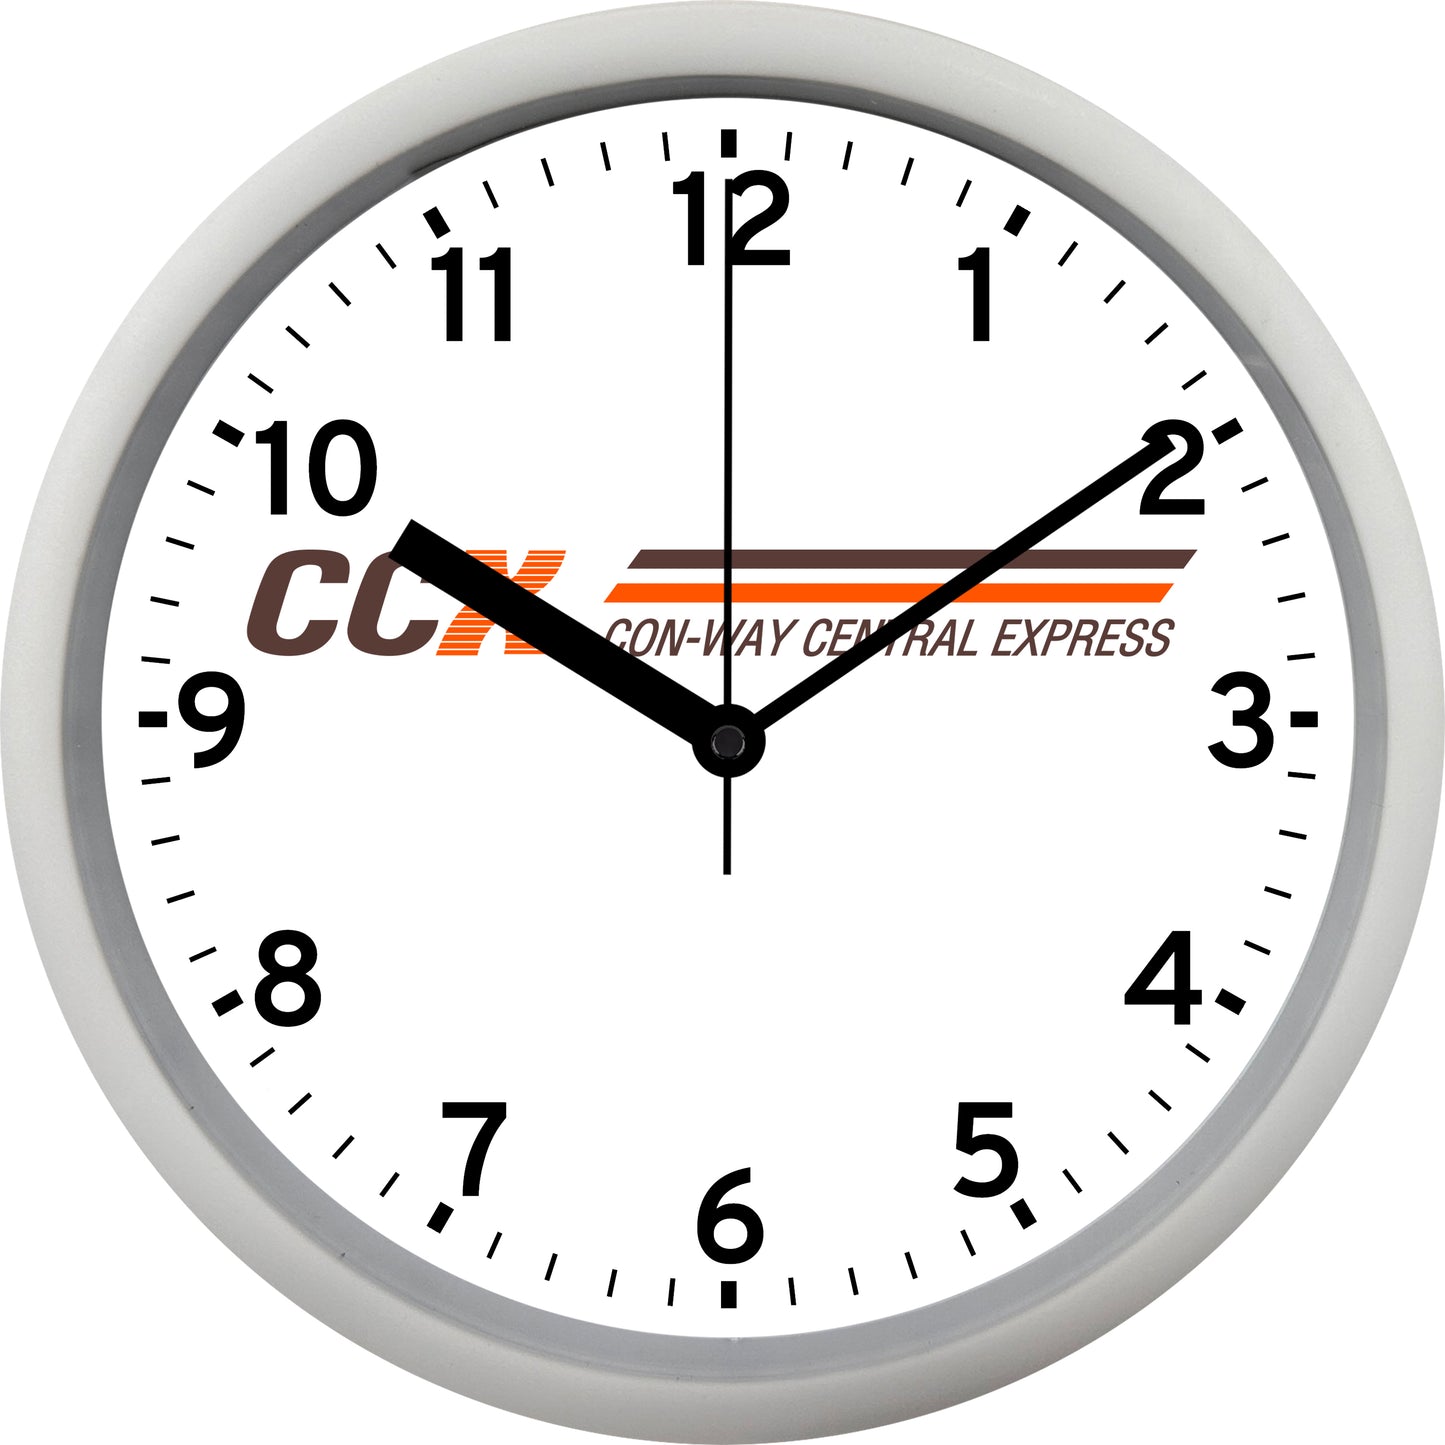 Con-Way Central Express "CCX" Wall Clock